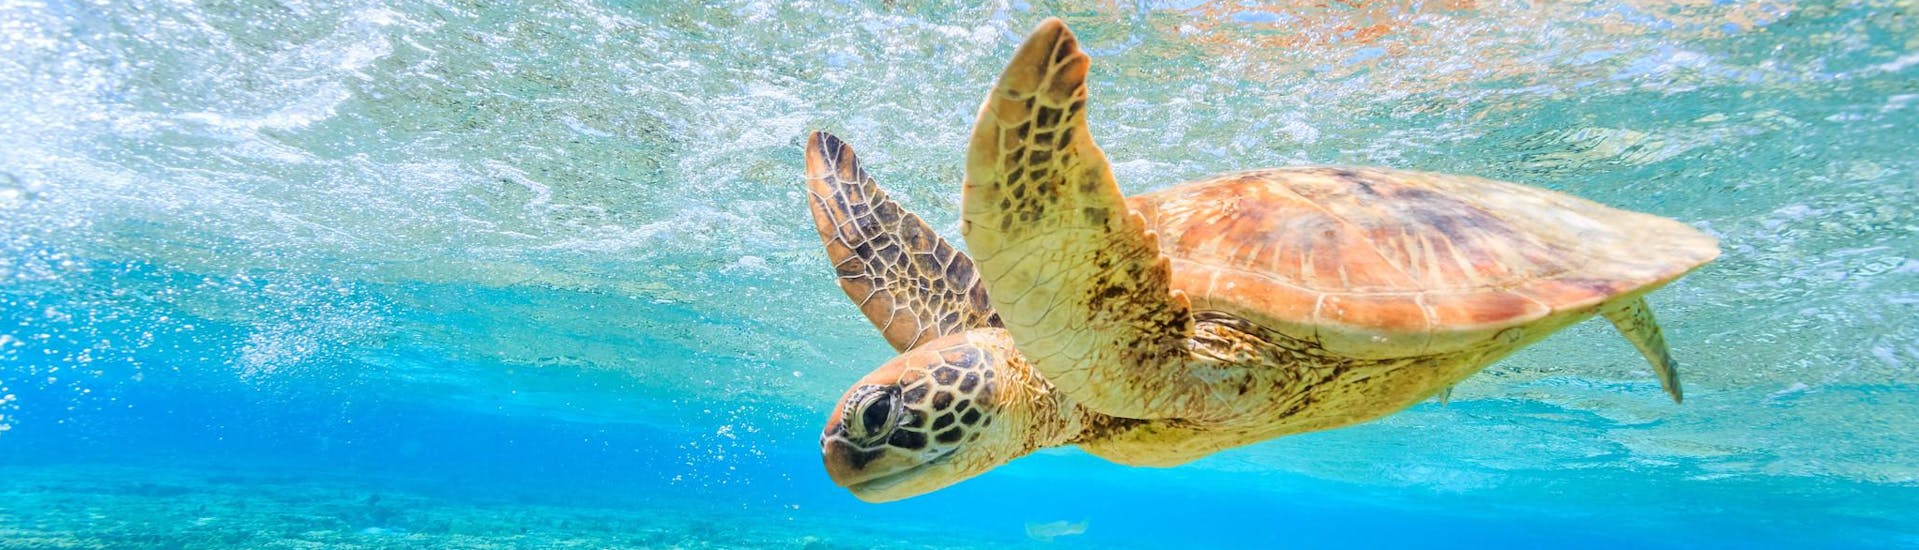 Tartaruga avvistata mentre nuota nella barriera corallina